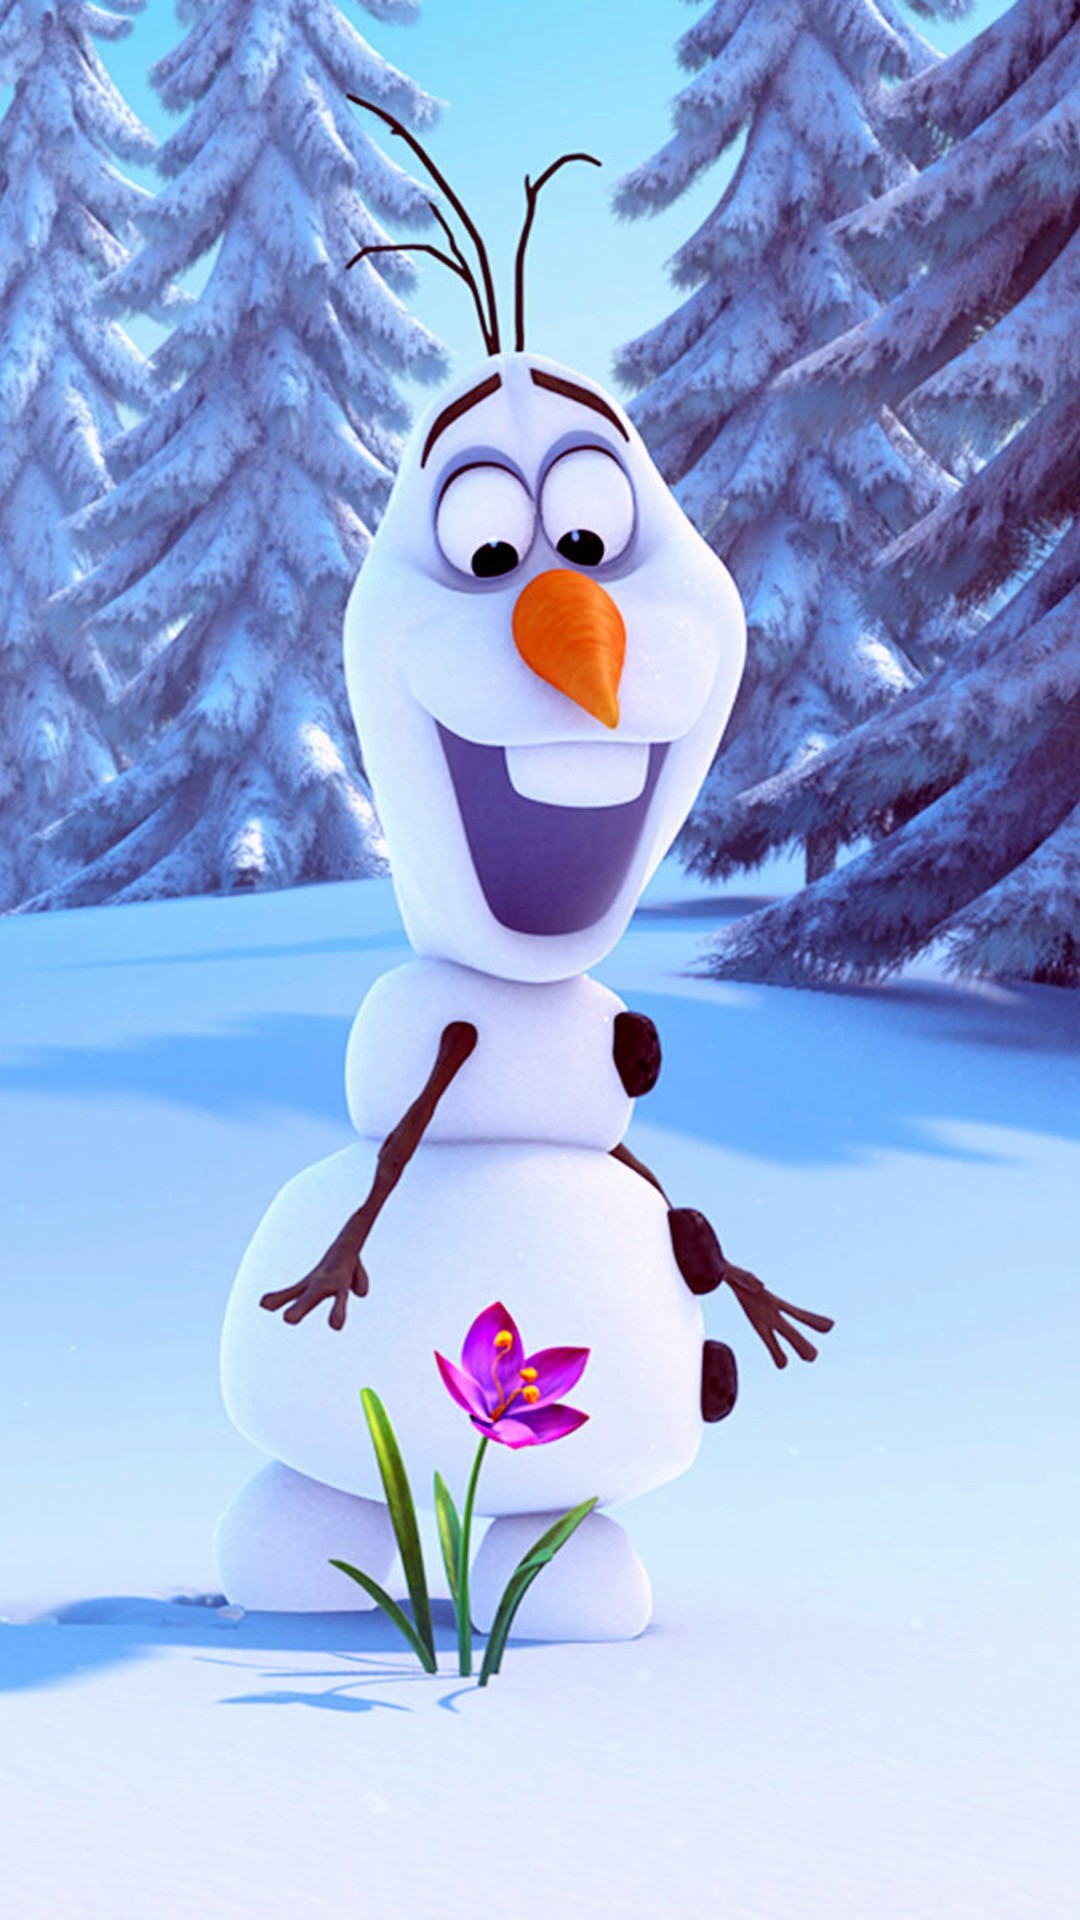 1080x1920 Best 25+ Frozen wallpaper ideas on Pinterest | Disney frozen art, Disney  frozen and Frozen art